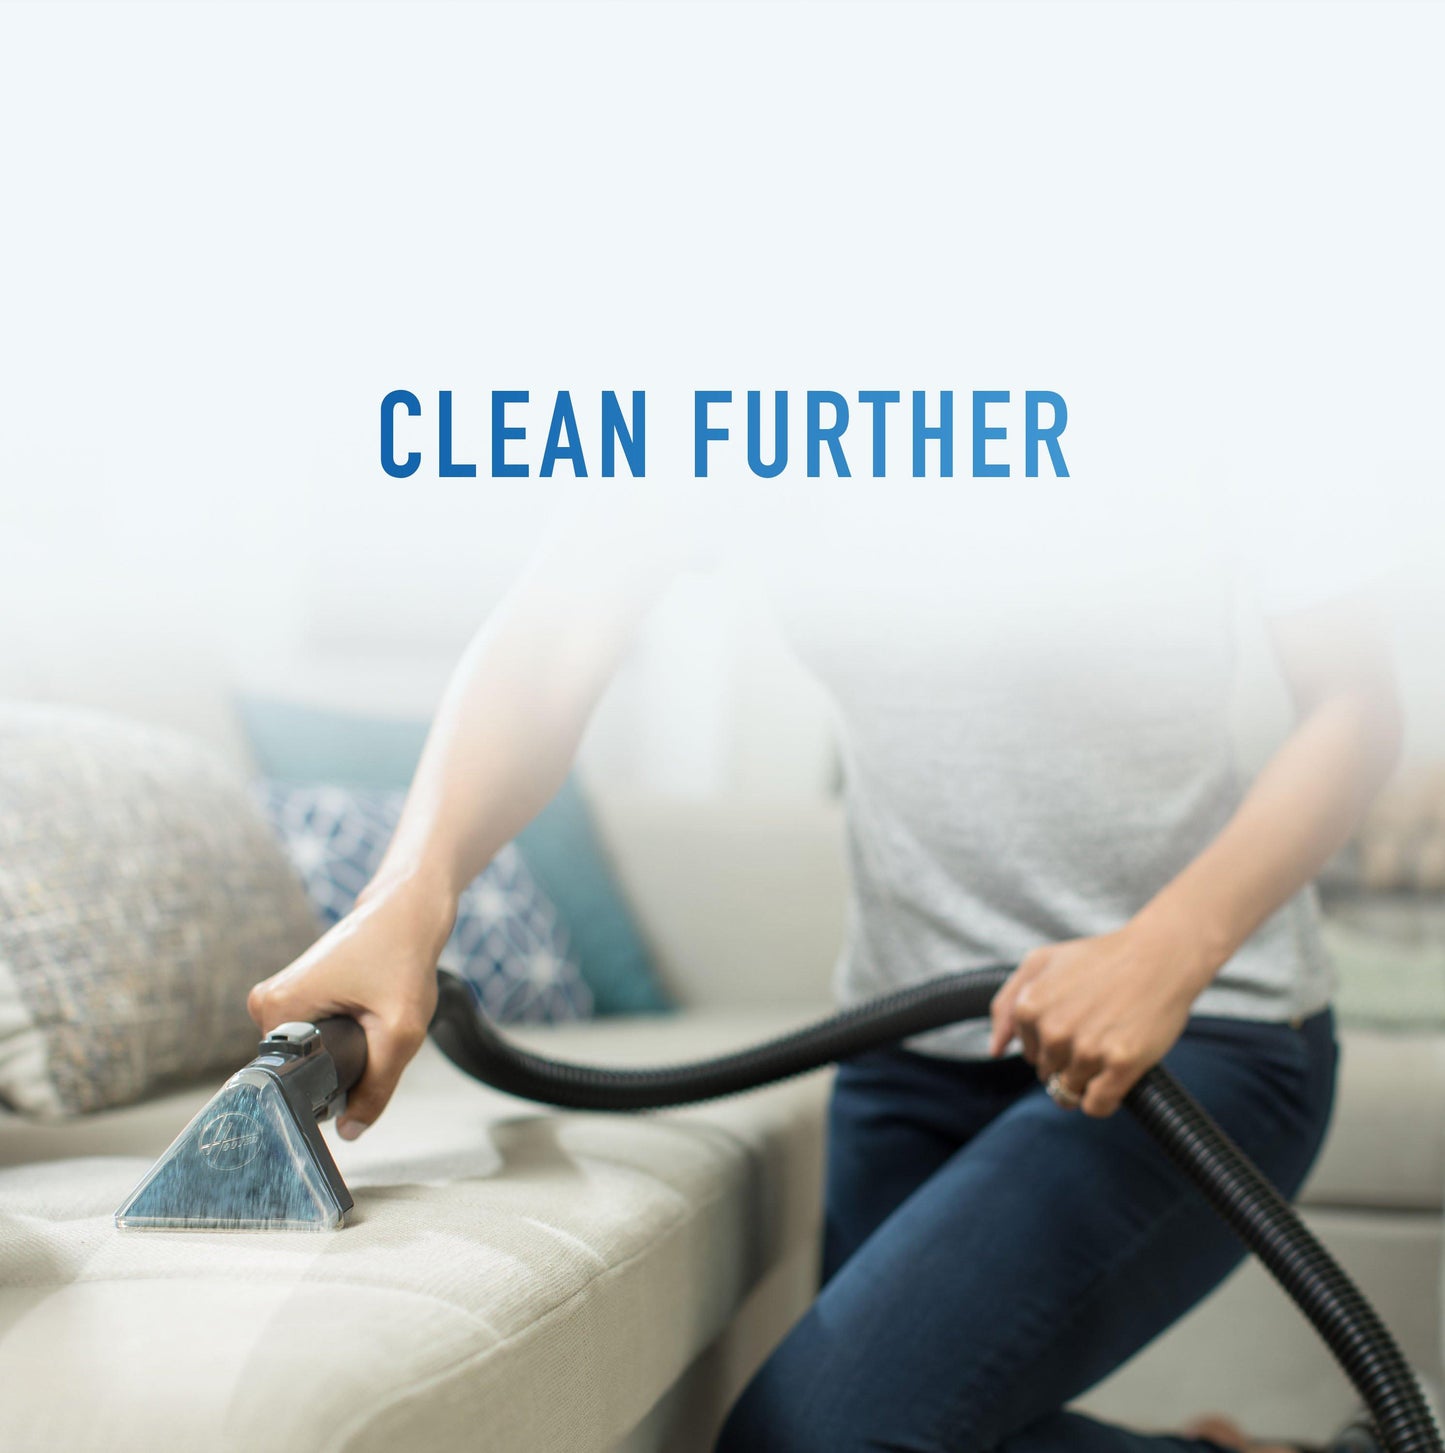 Smartwash+ Carpet Cleaner